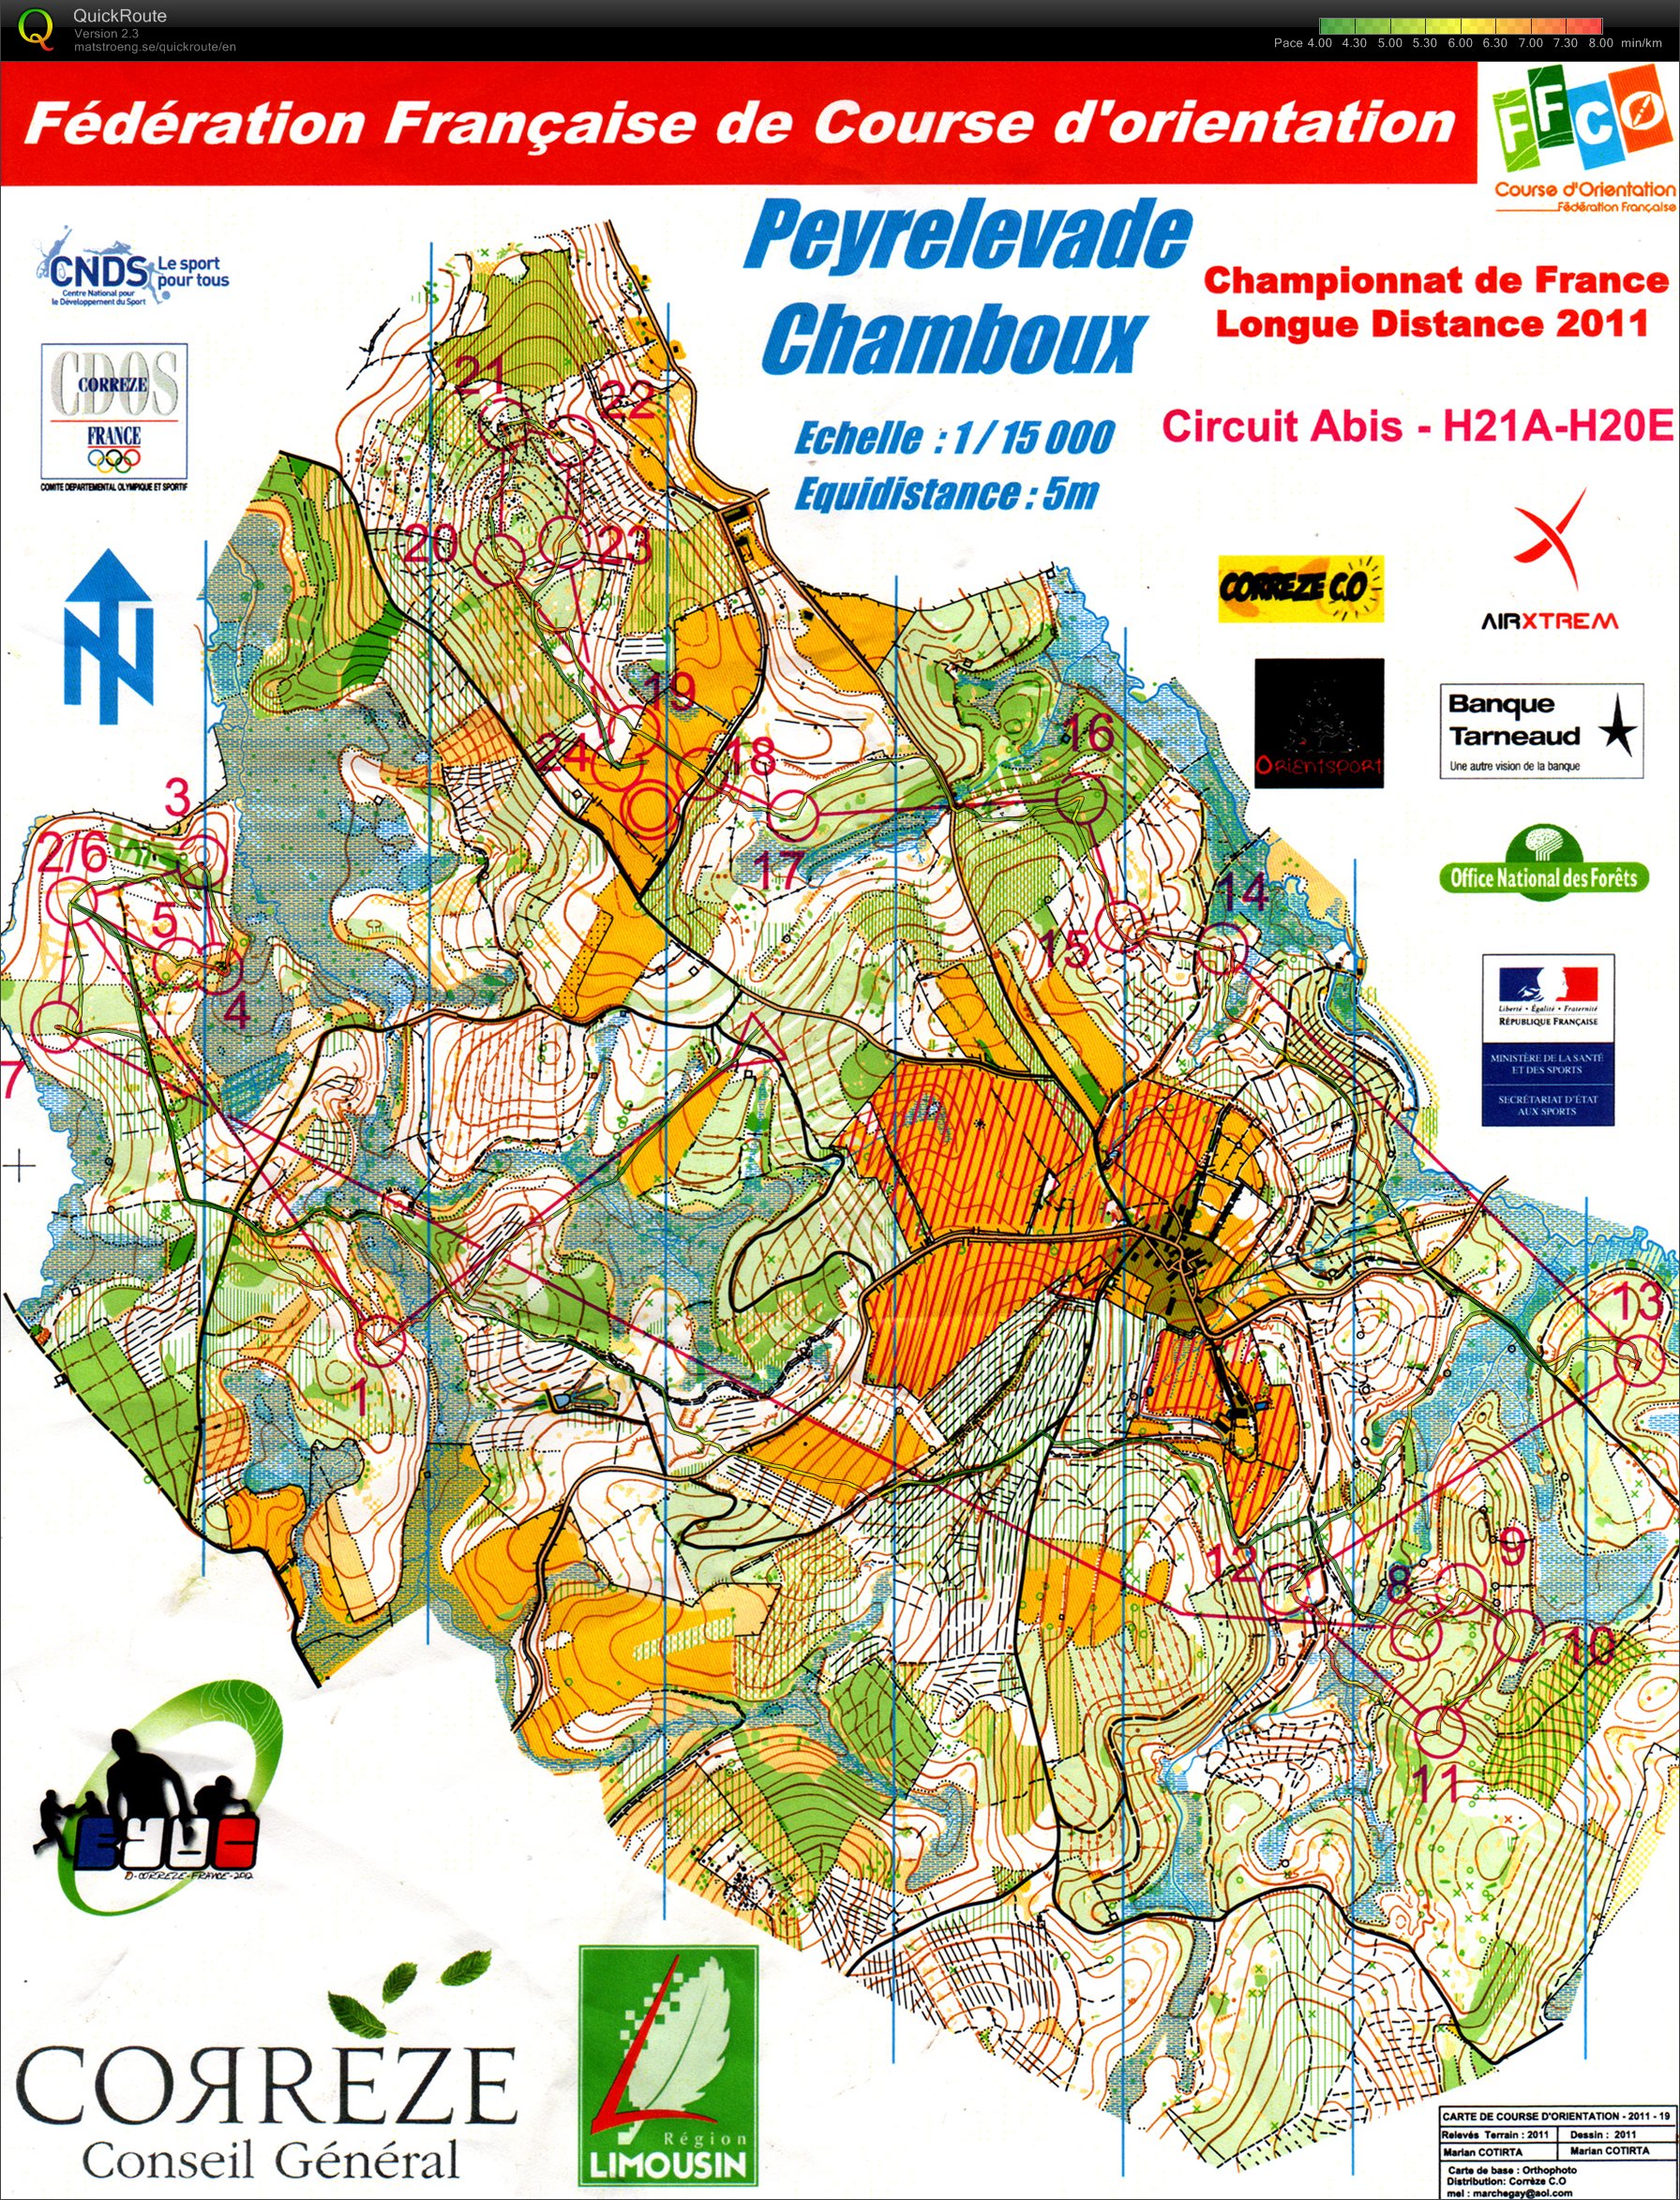 Championnats de France 2011 - LD (16-07-2011)